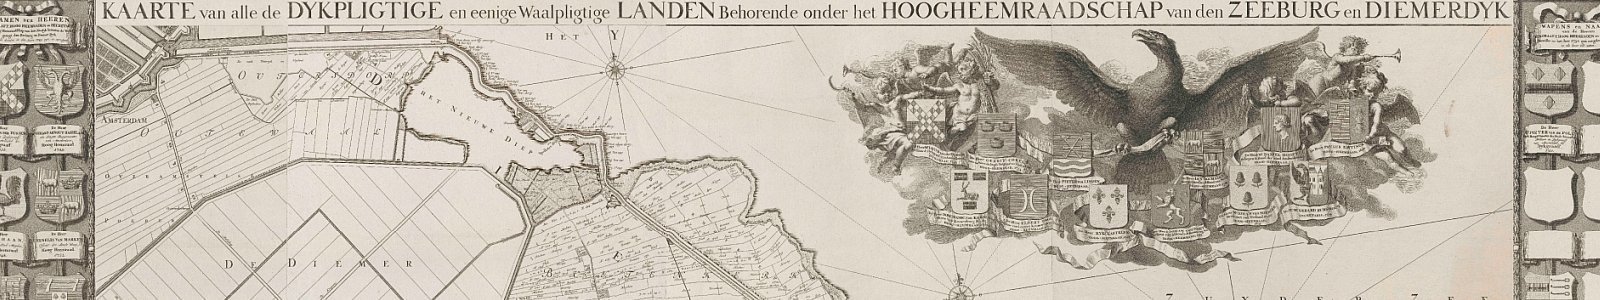 Detail wandkaart Zeeburg- and Diemerdijk, Jan Wandelaar, ca. 1781